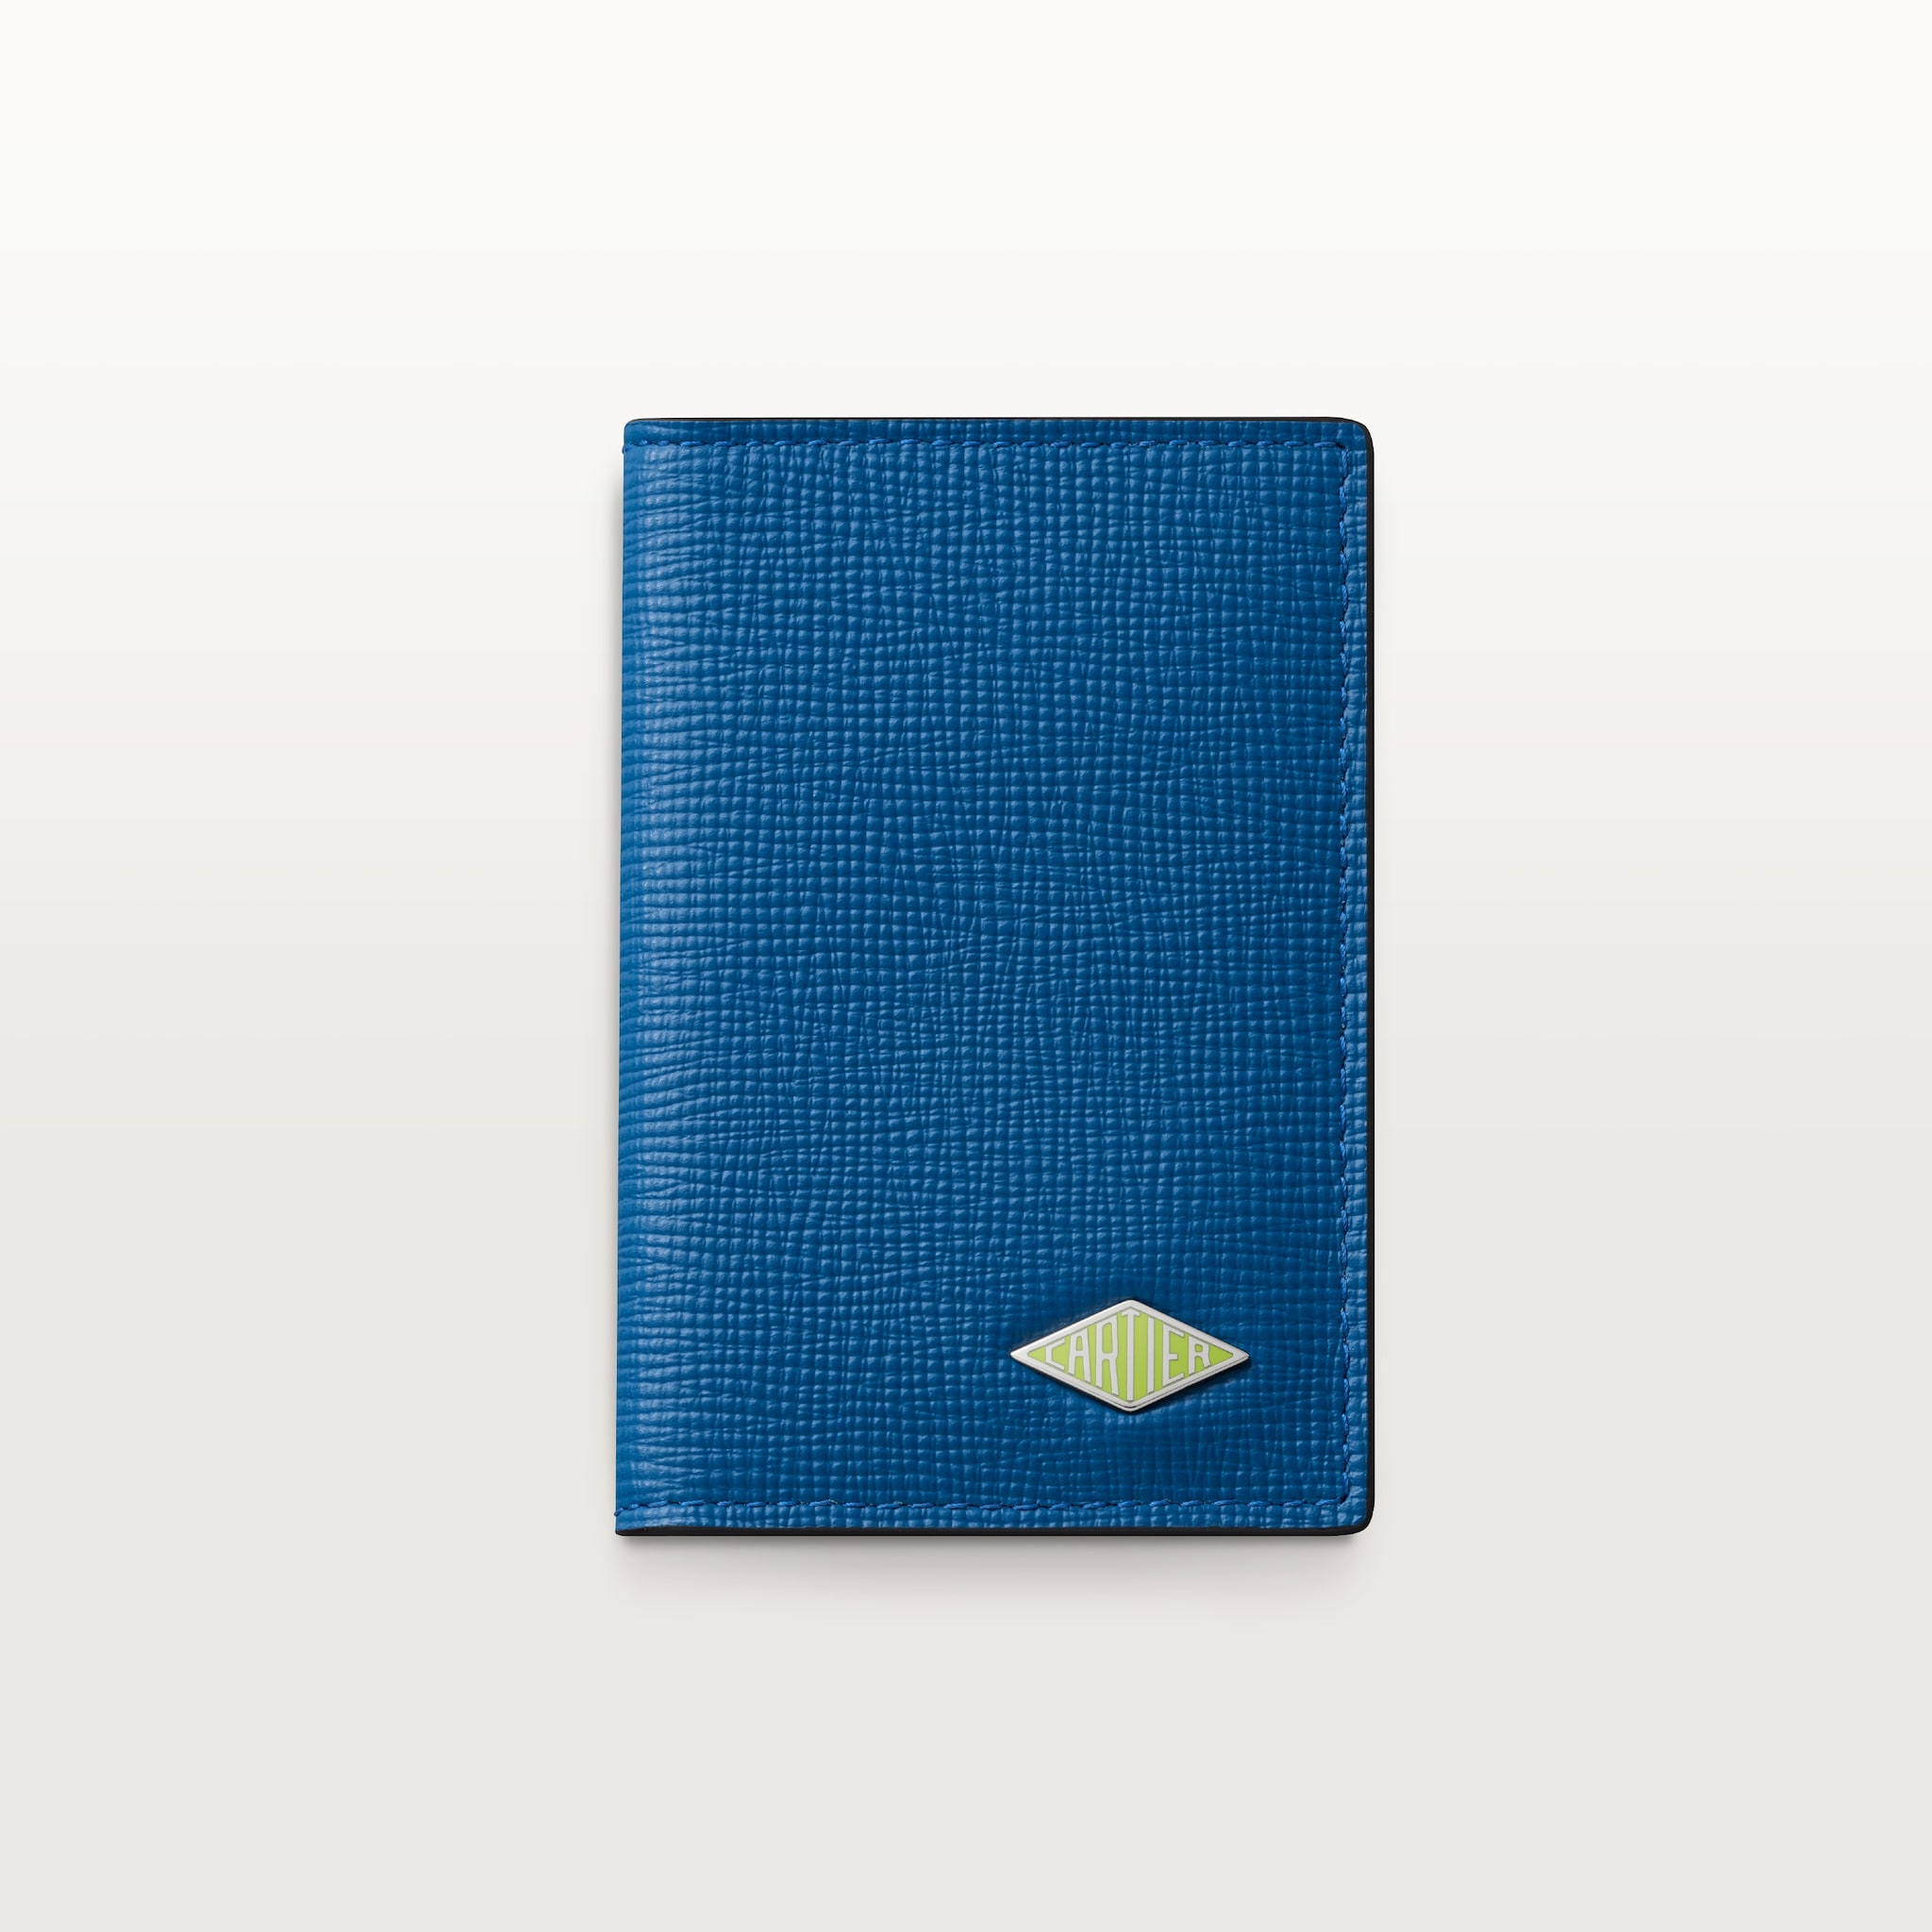 Four-credit card holder, Cartier LosangeOcean blue grained calfskin, palladium finish and lime enamel